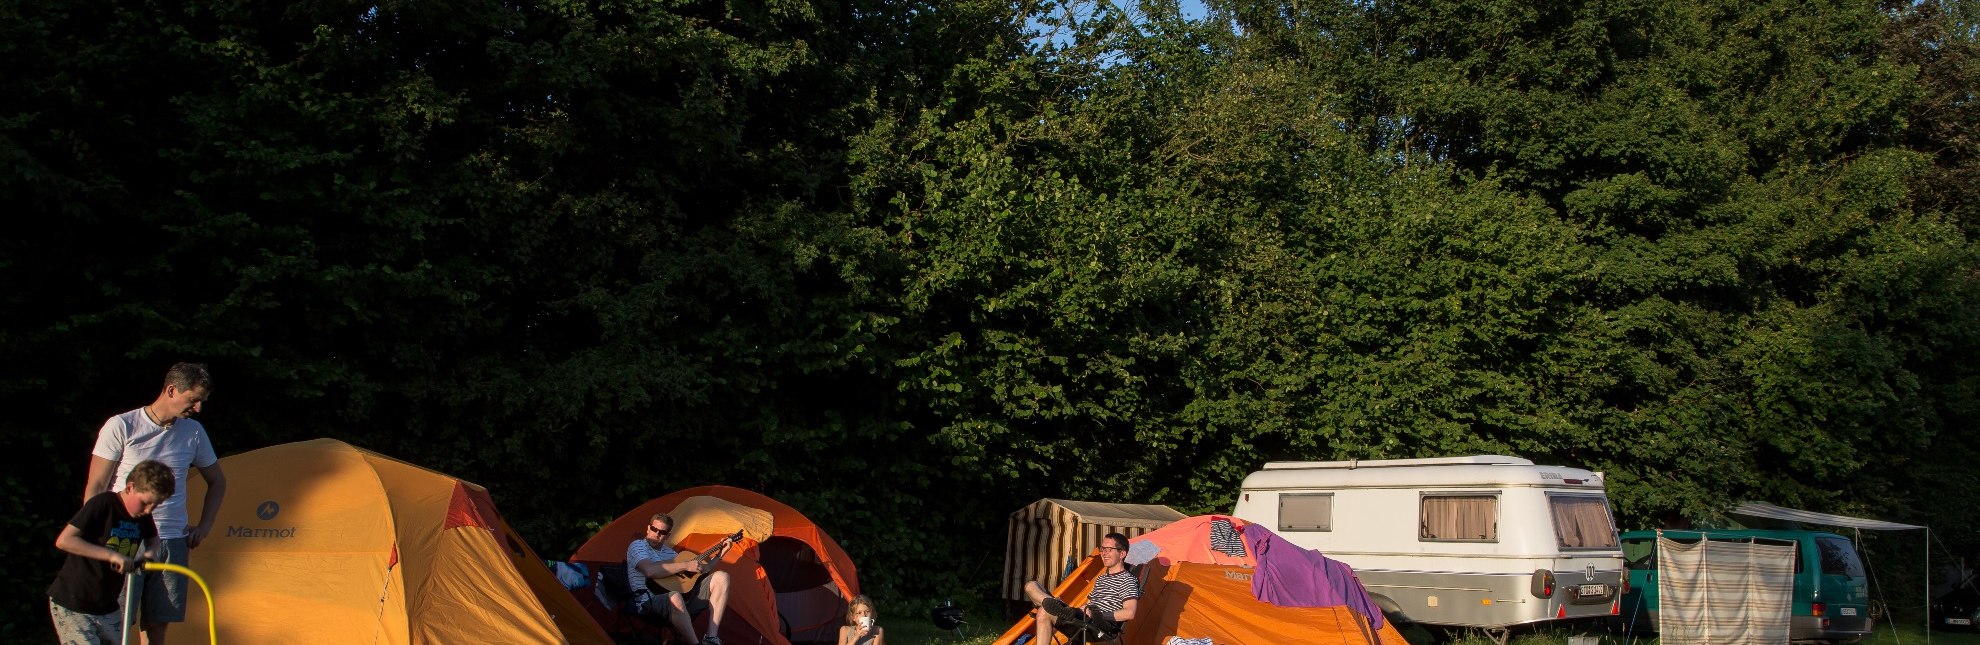 musterbild-camping, © Jens Butz